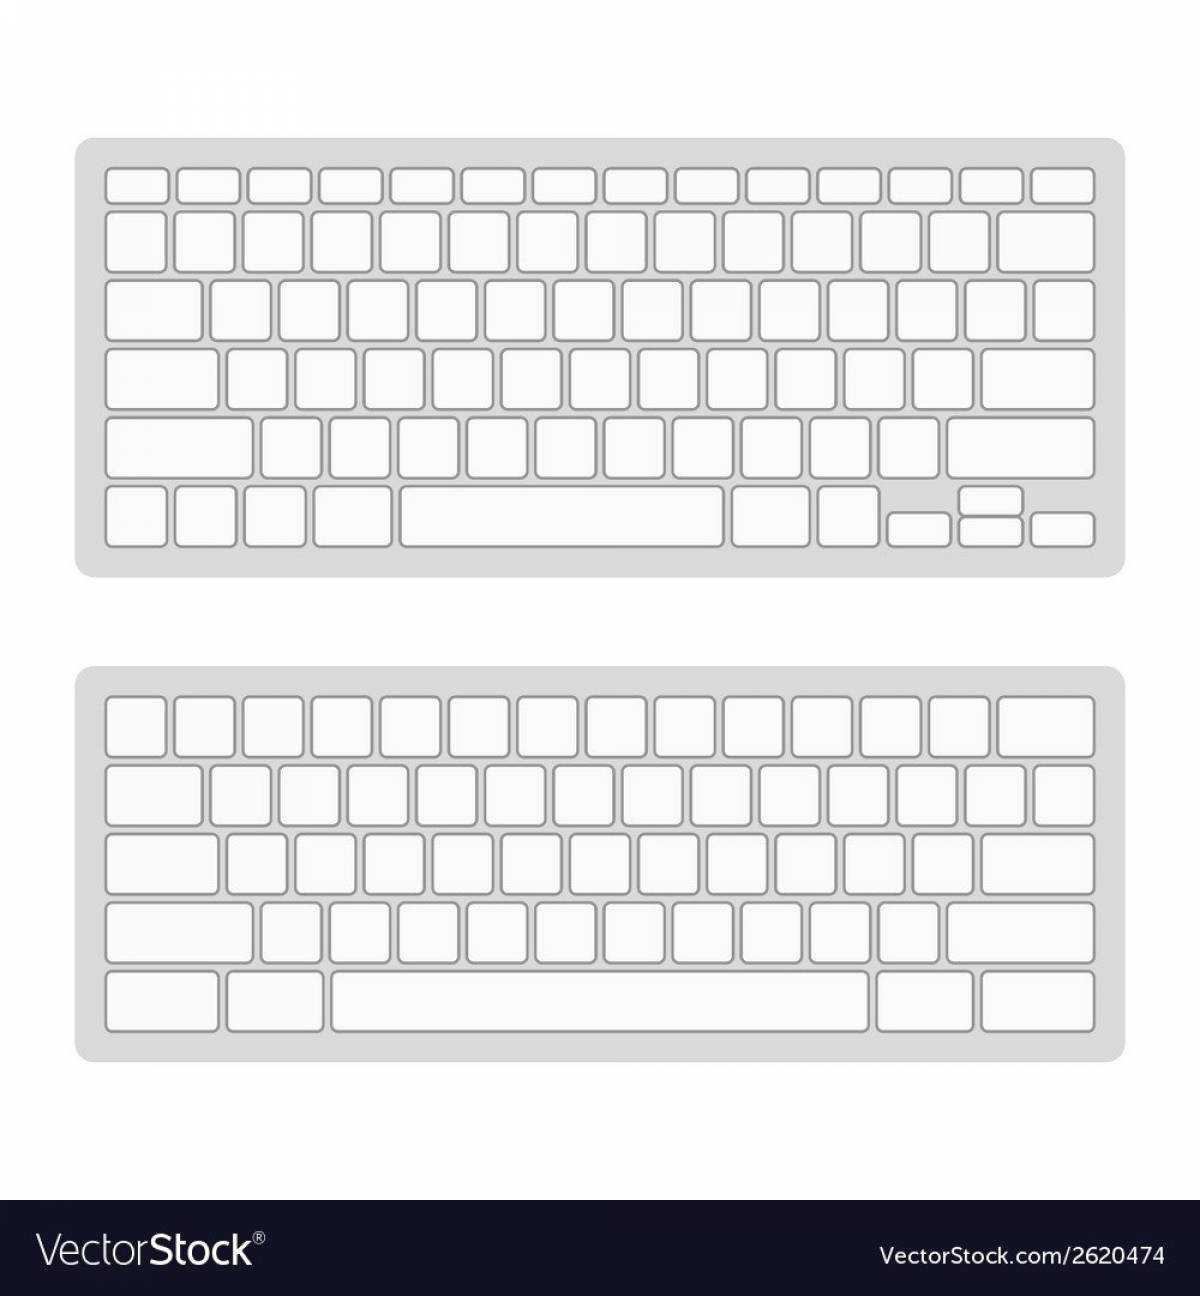 Playful keyboard layout coloring page